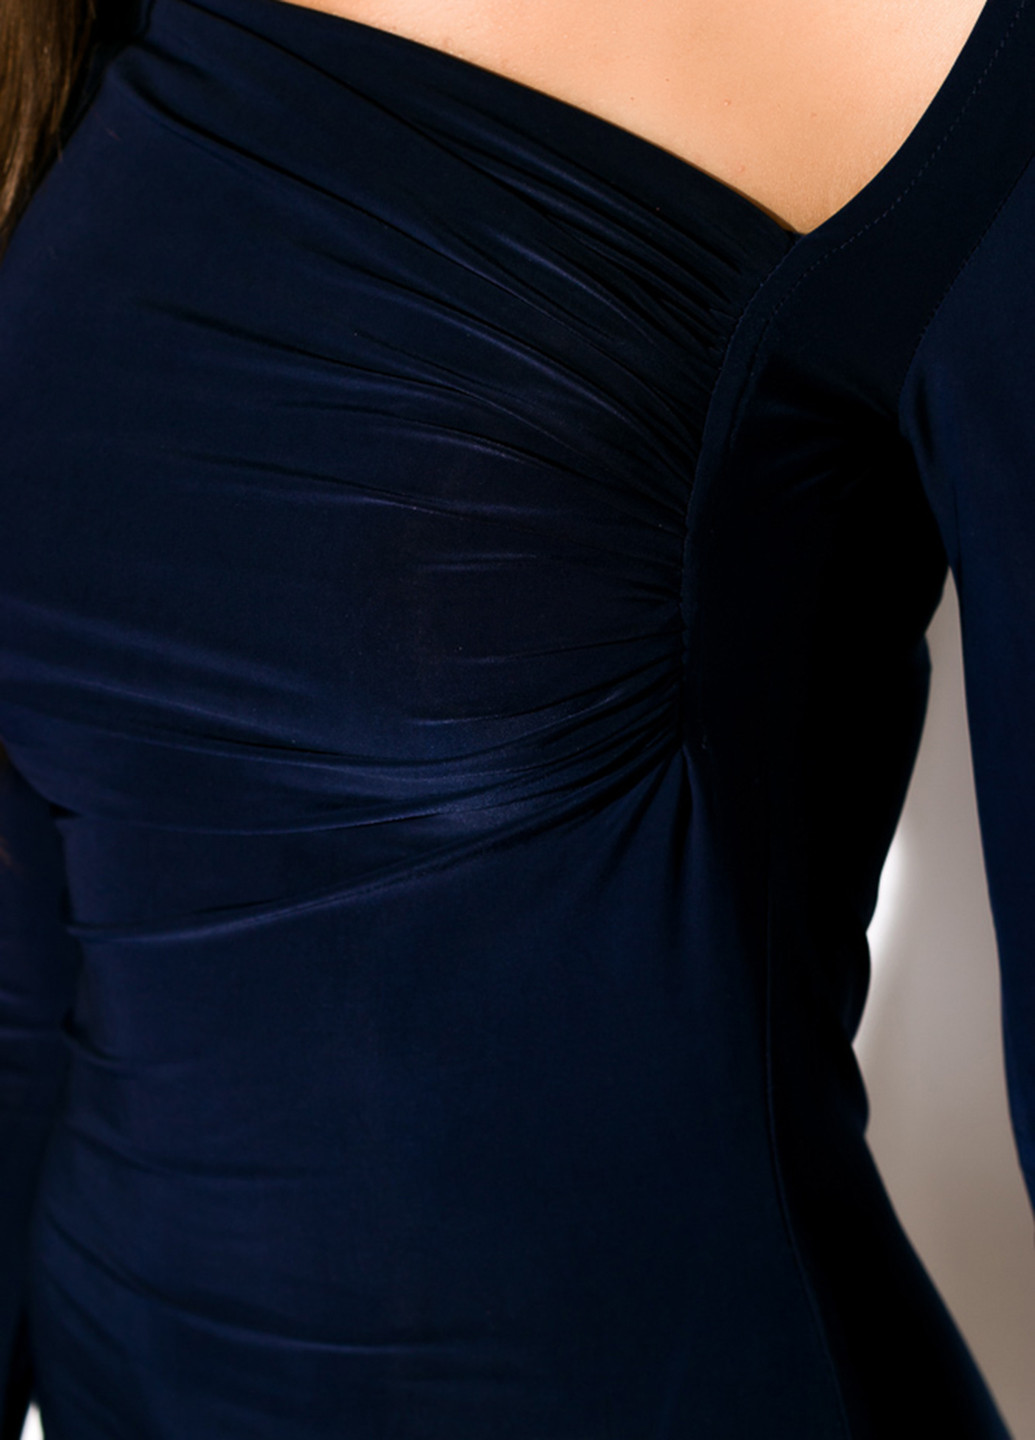 Темно-синее коктейльное платье футляр Time of Style однотонное